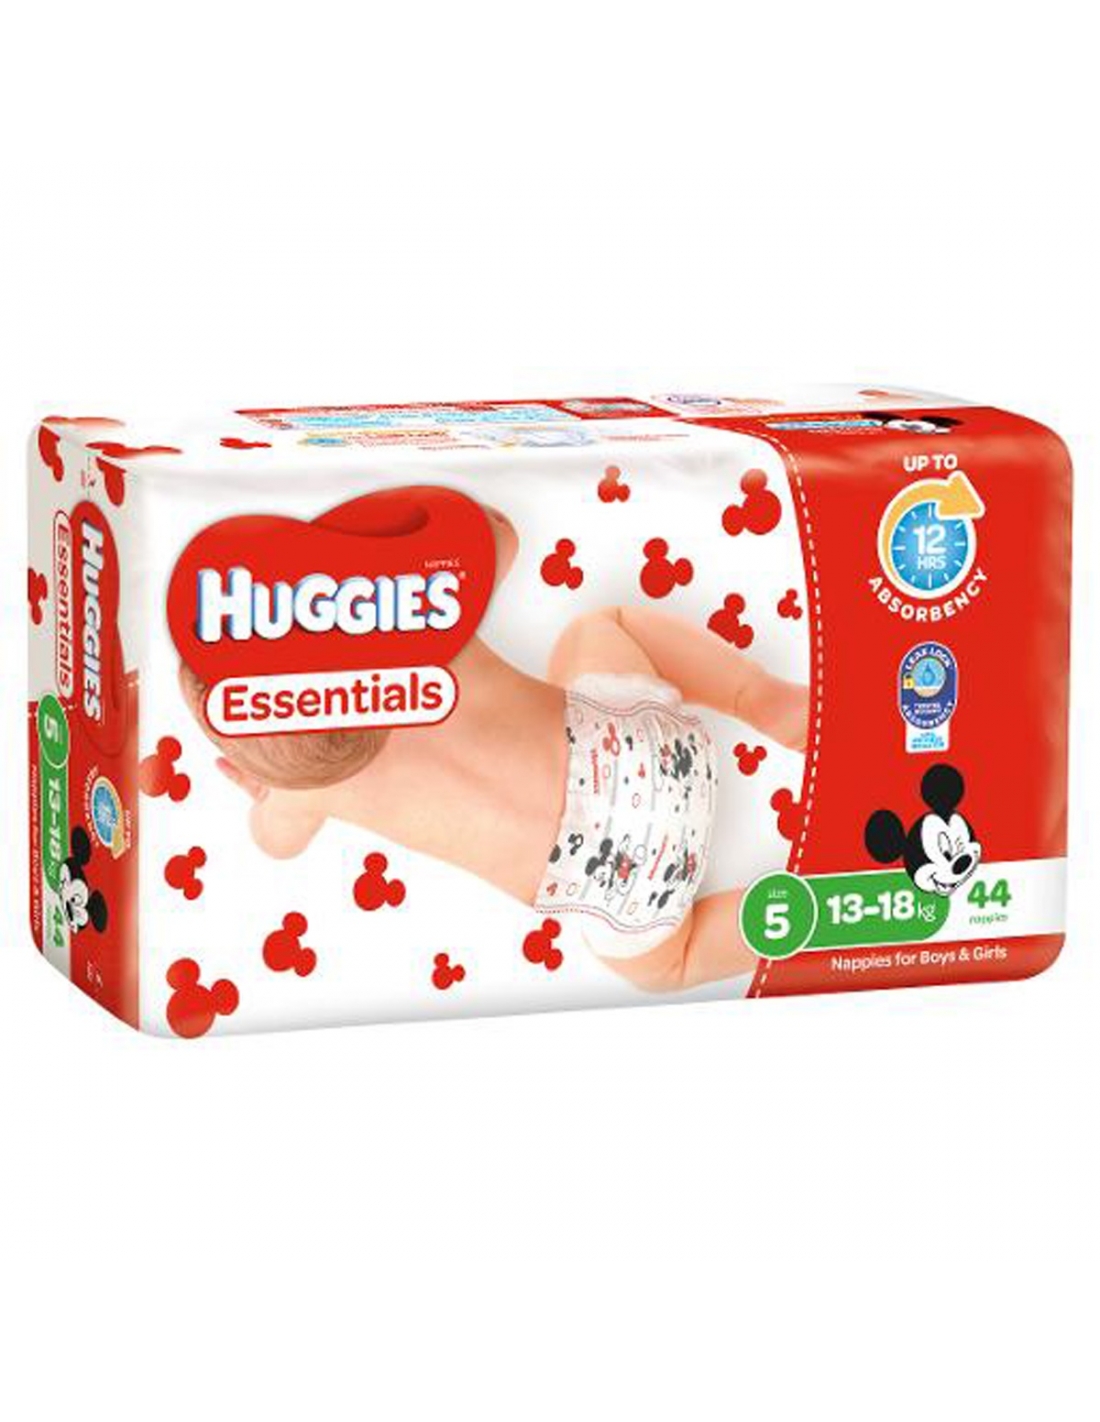 Huggies Essentials Walker taille 5 couches 44 paquet